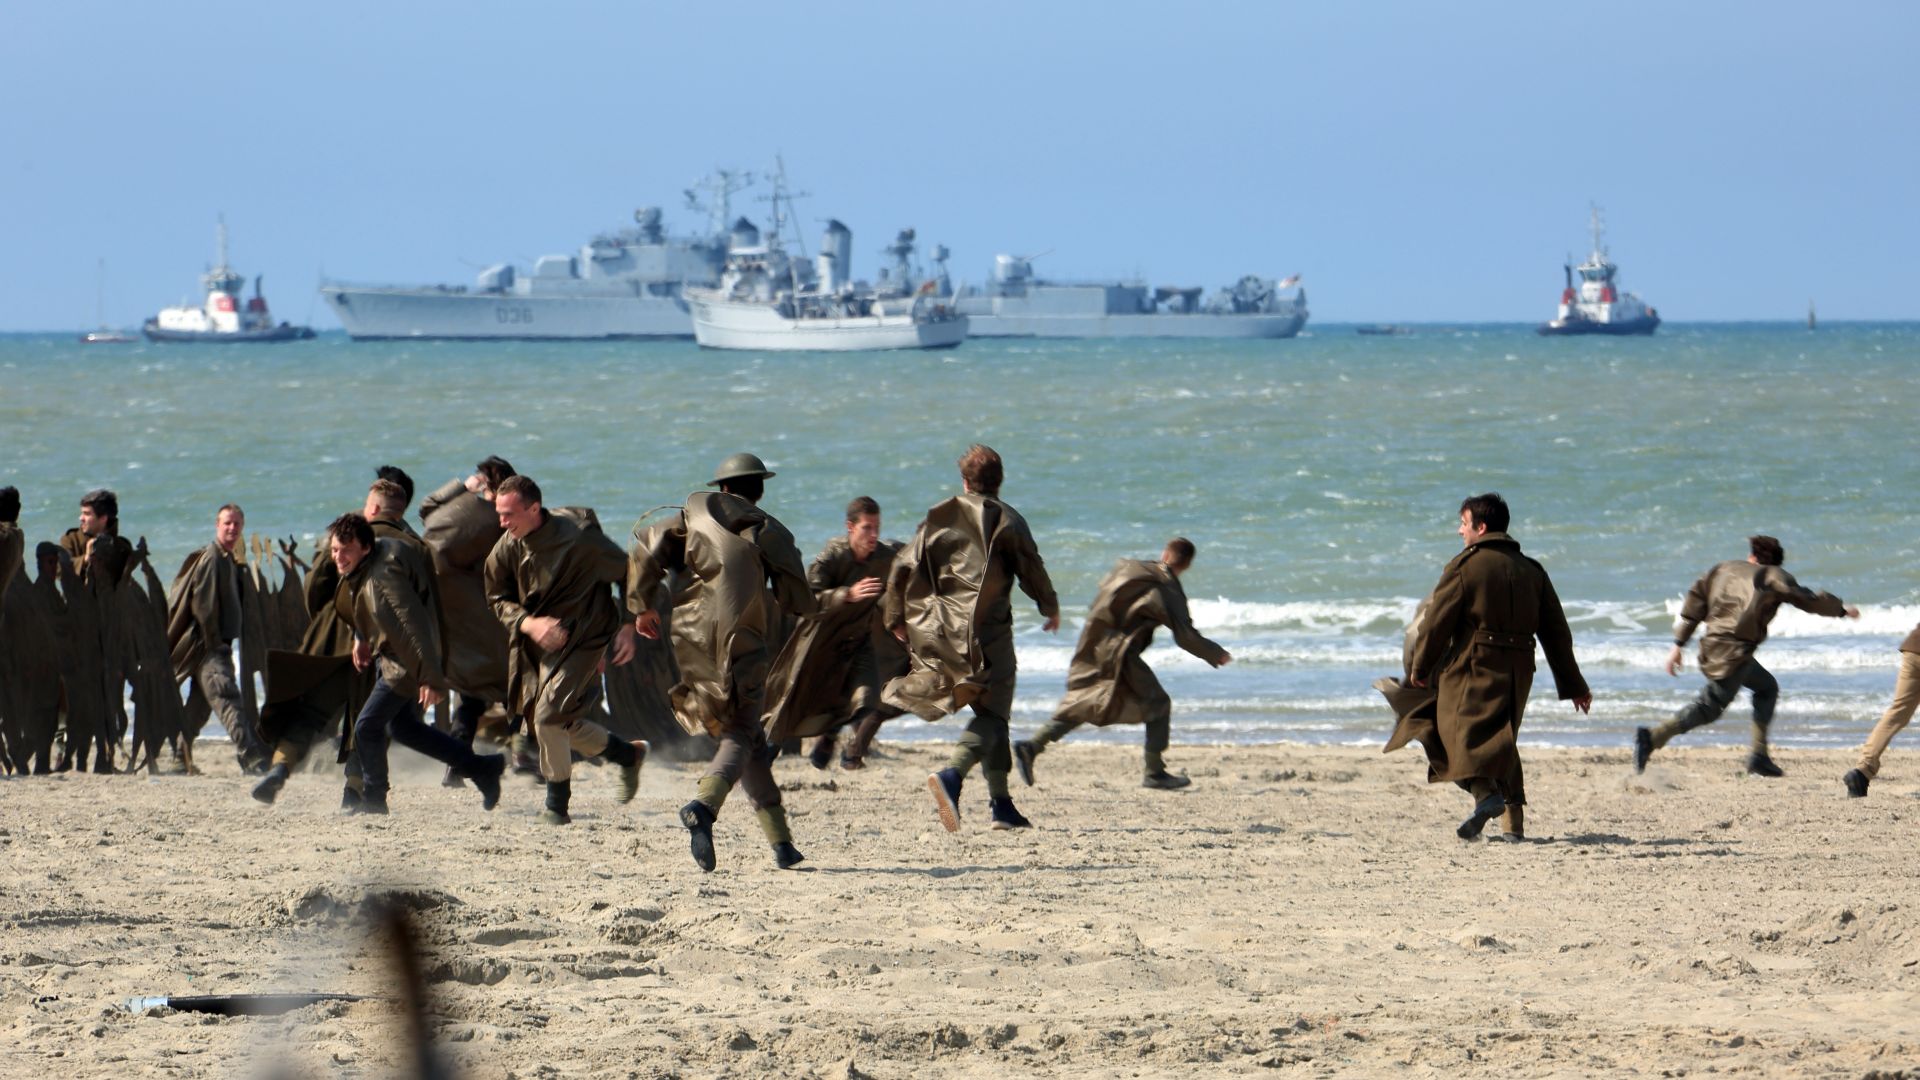 Dunkirk, 5k (horizontal)